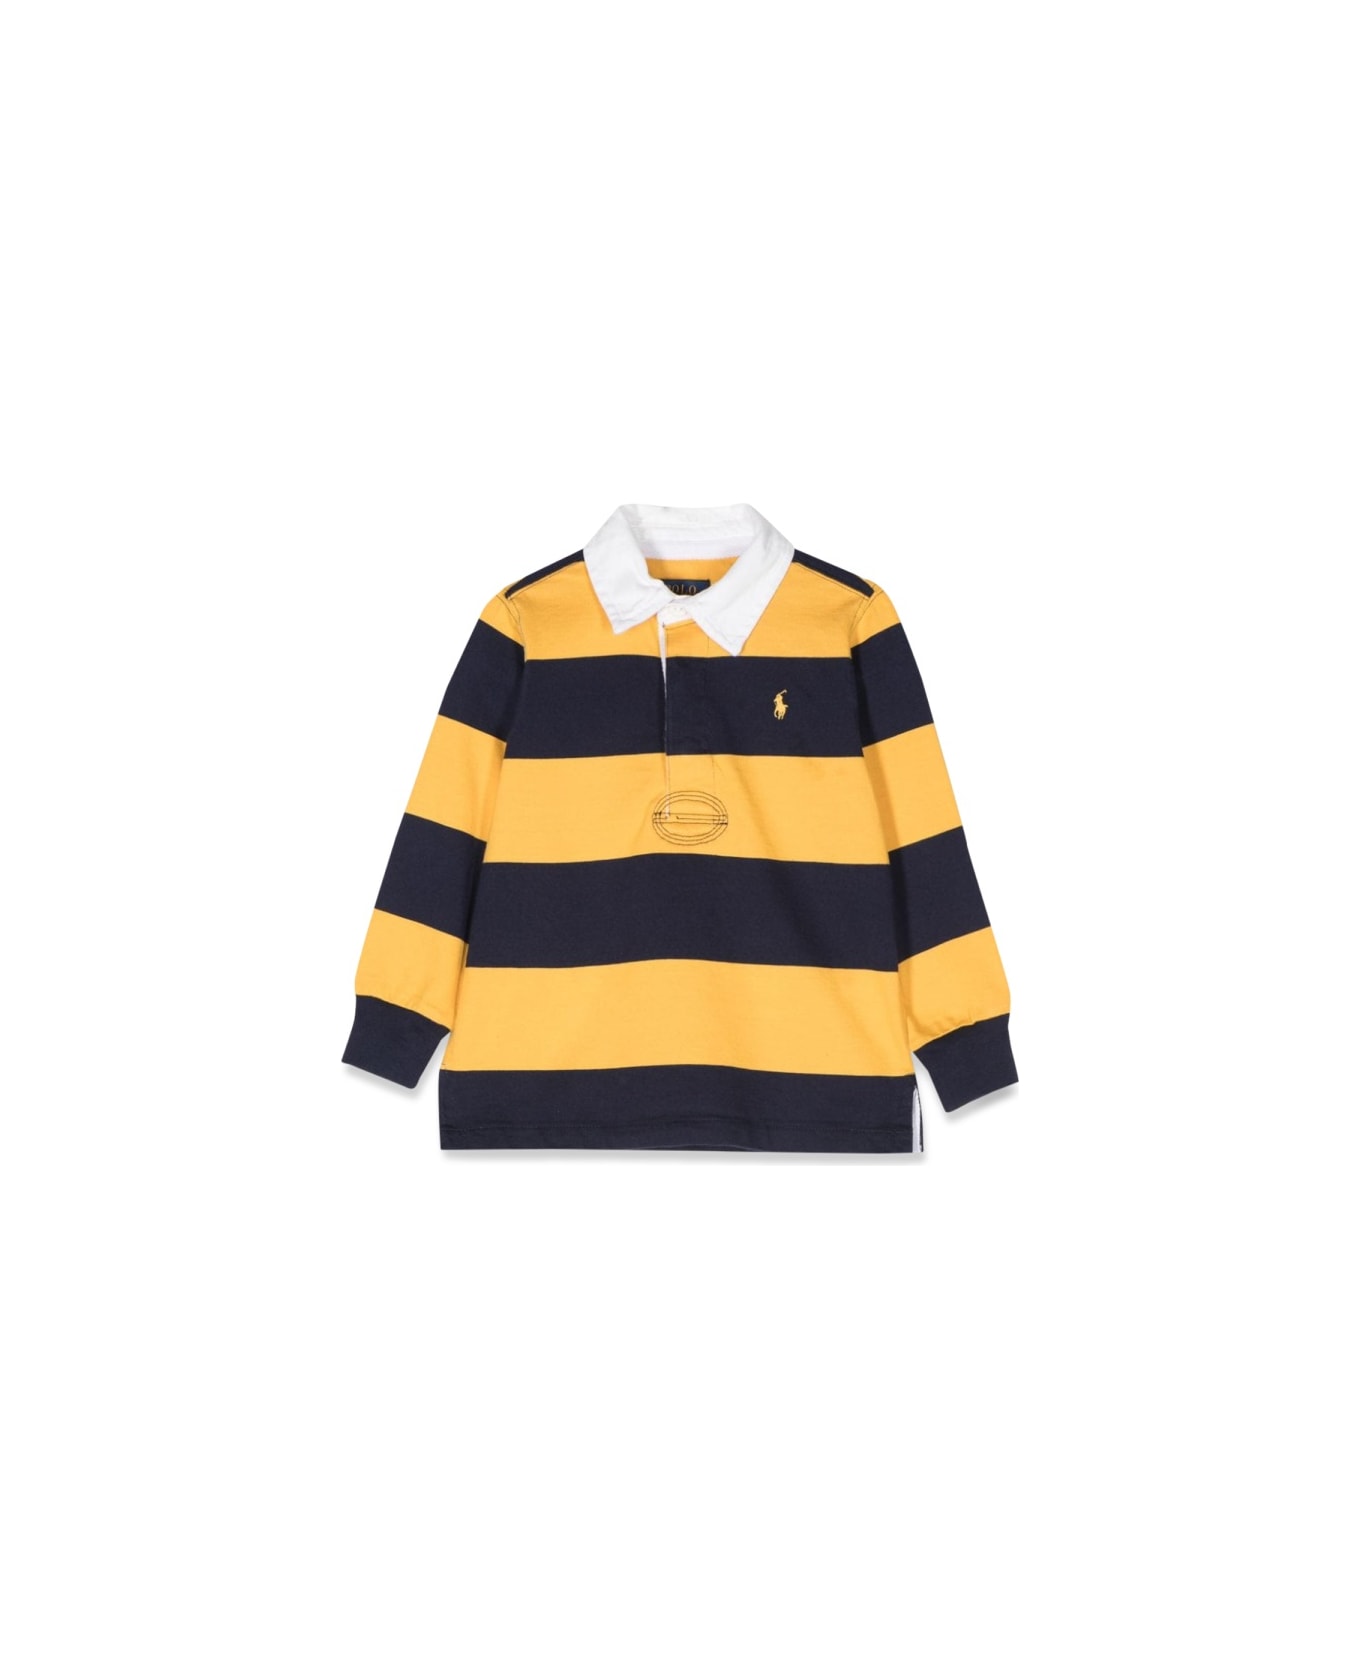 Polo Ralph Lauren Rugby Shirt - MULTICOLOUR